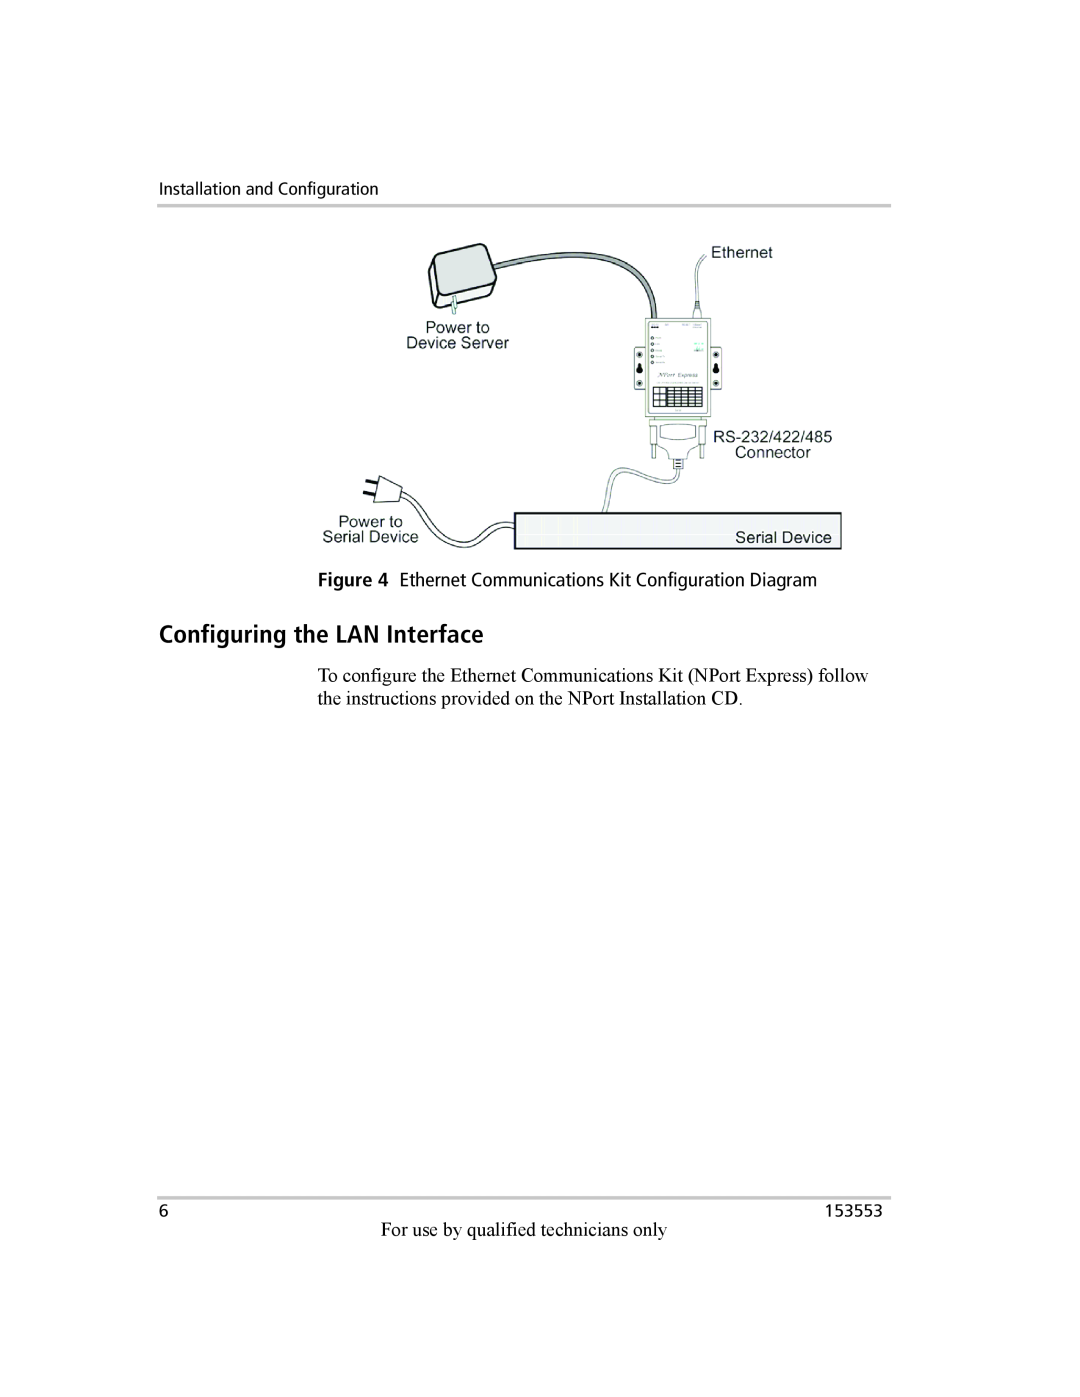 Xantrex Technology GT Series Configuring the LAN Interface, Ethernet Communications Kit Configuration Diagram, 153553 